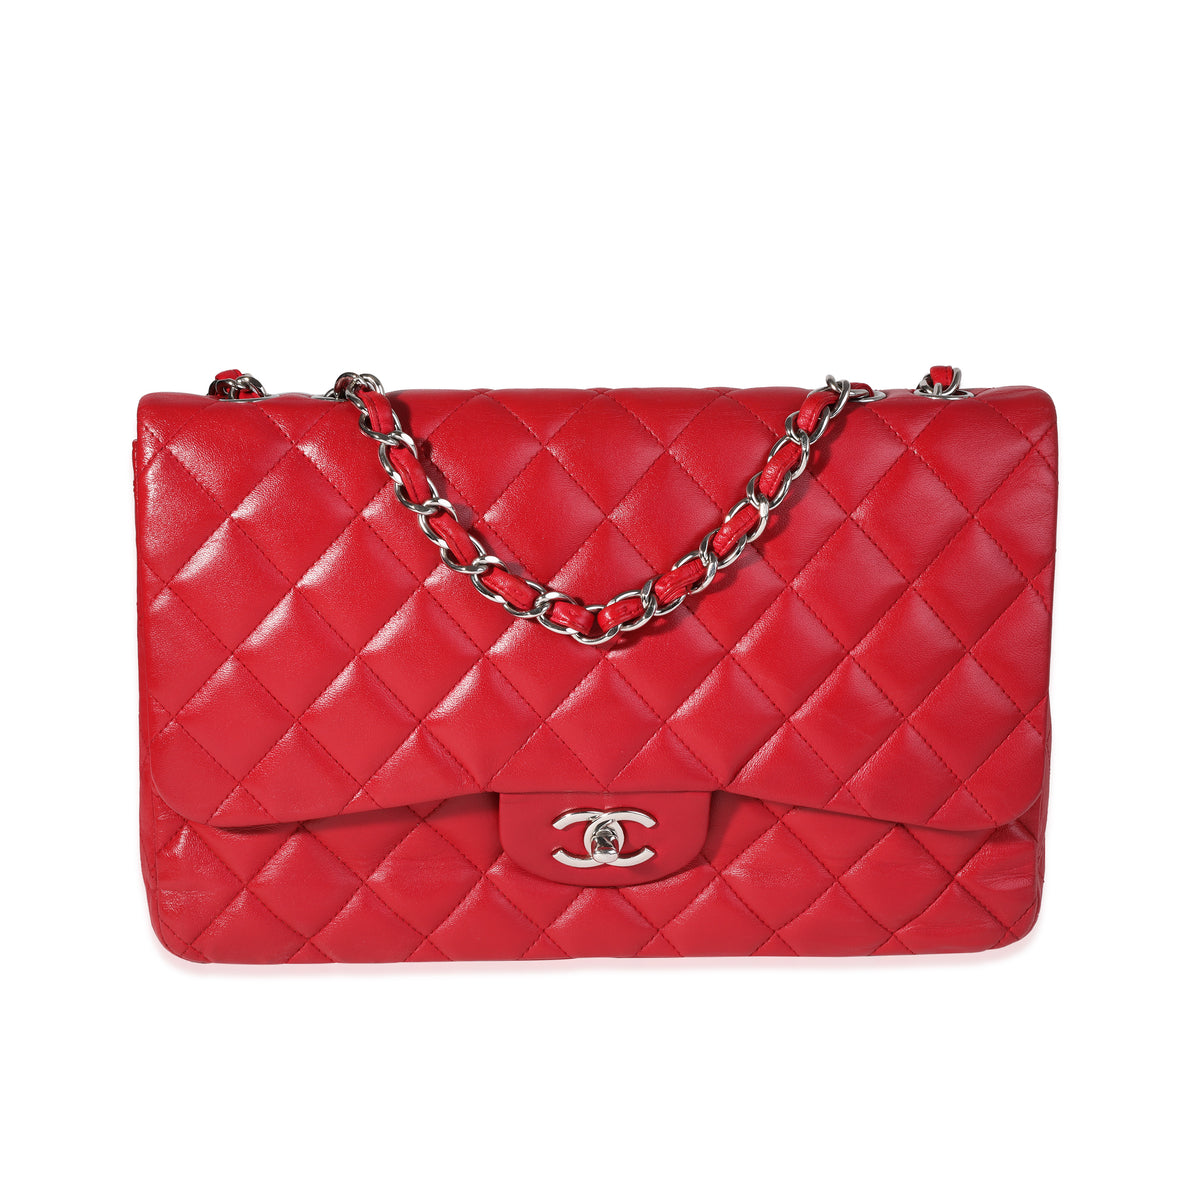 Authentic chanel mini Square Flap Bag Red Color  eBay